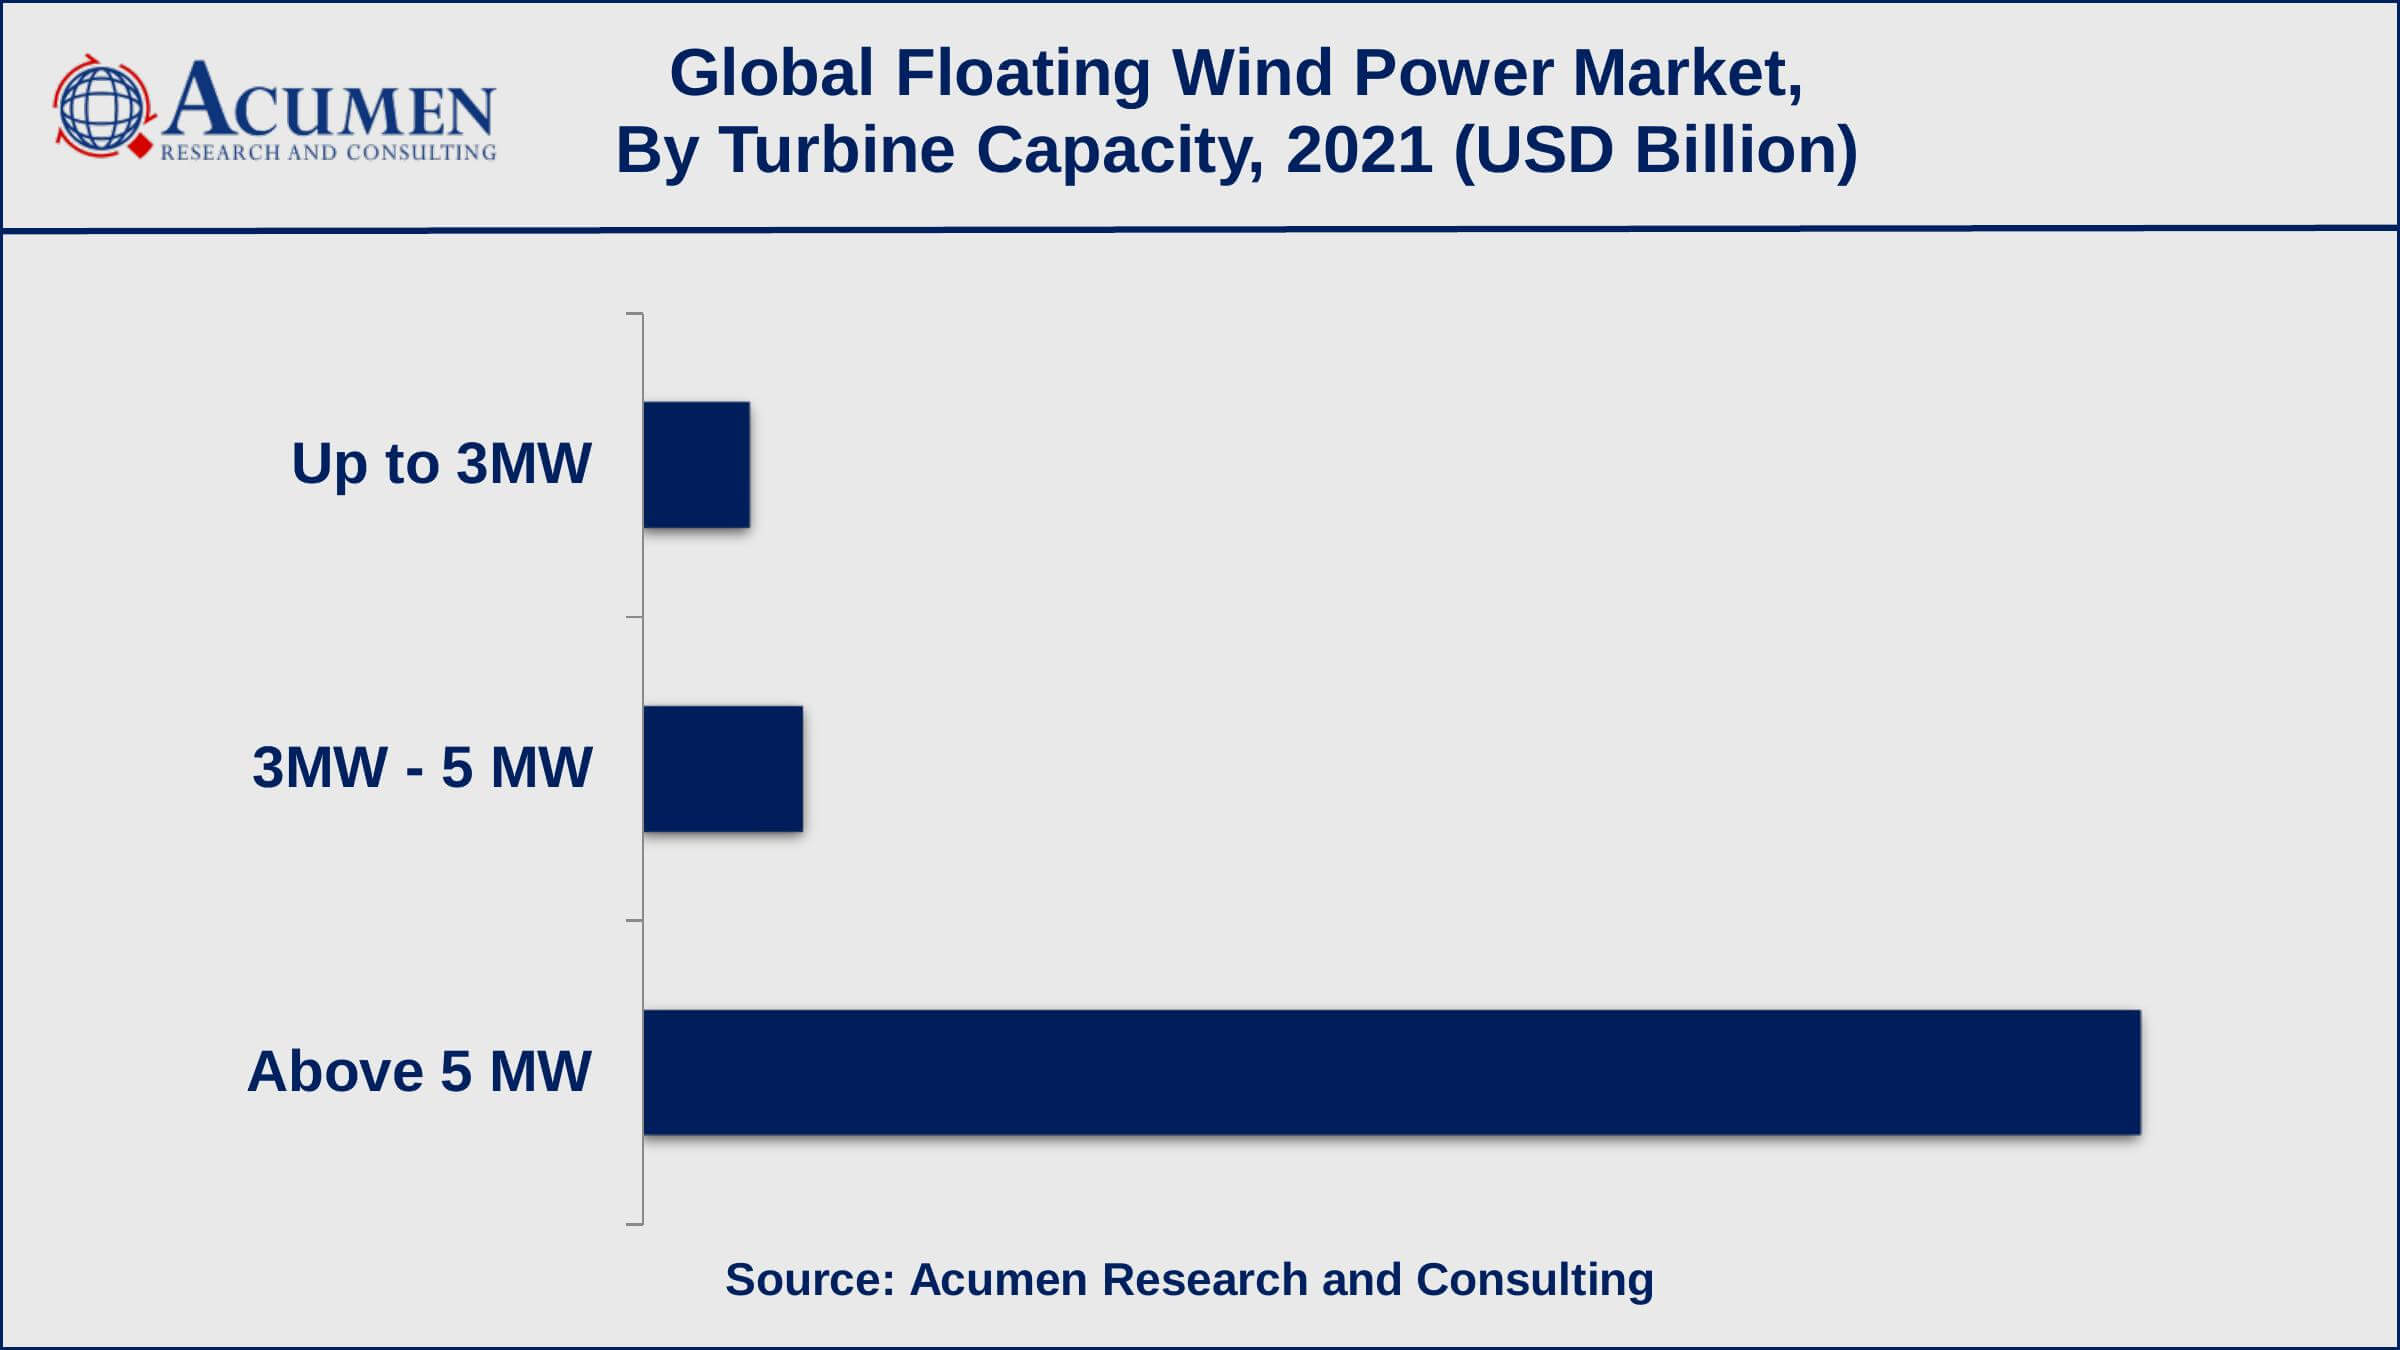 Among turbine capacity, the above 5MW sub-segment generated revenue of USD 688.5 million in 2021